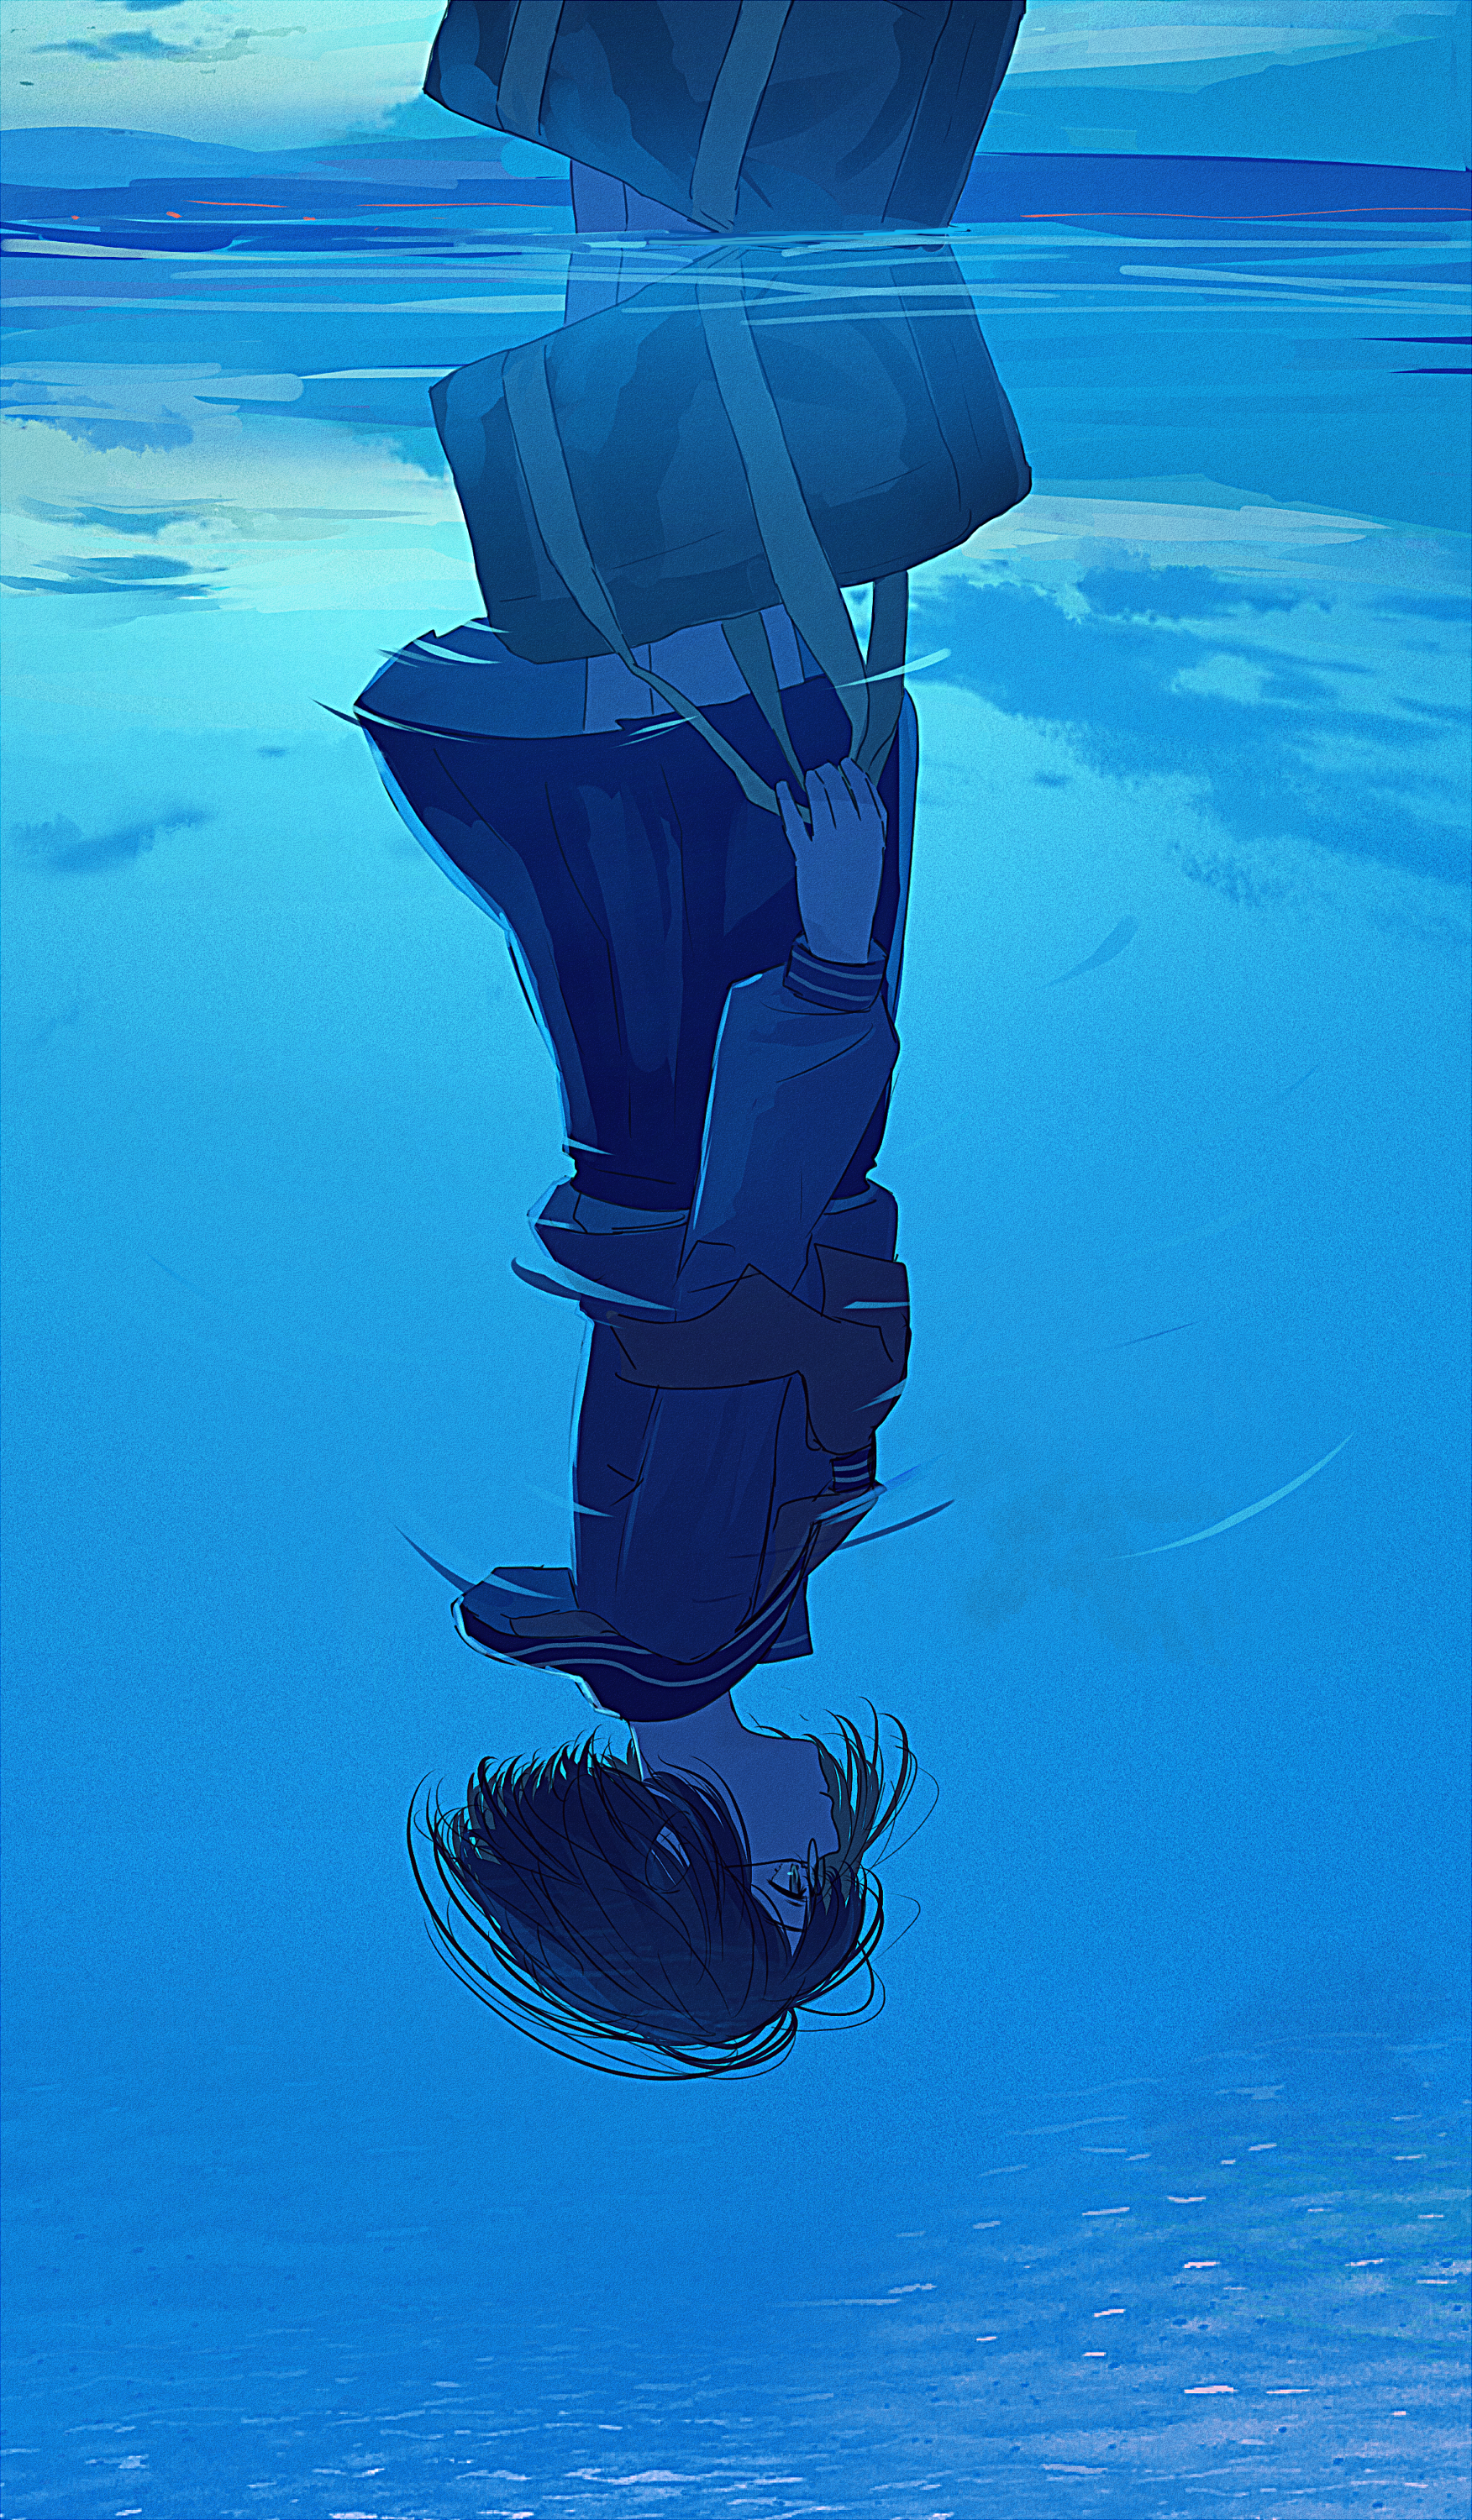 Anime 1752x3000 moescape anime girls anime short hair school uniform underwater portrait